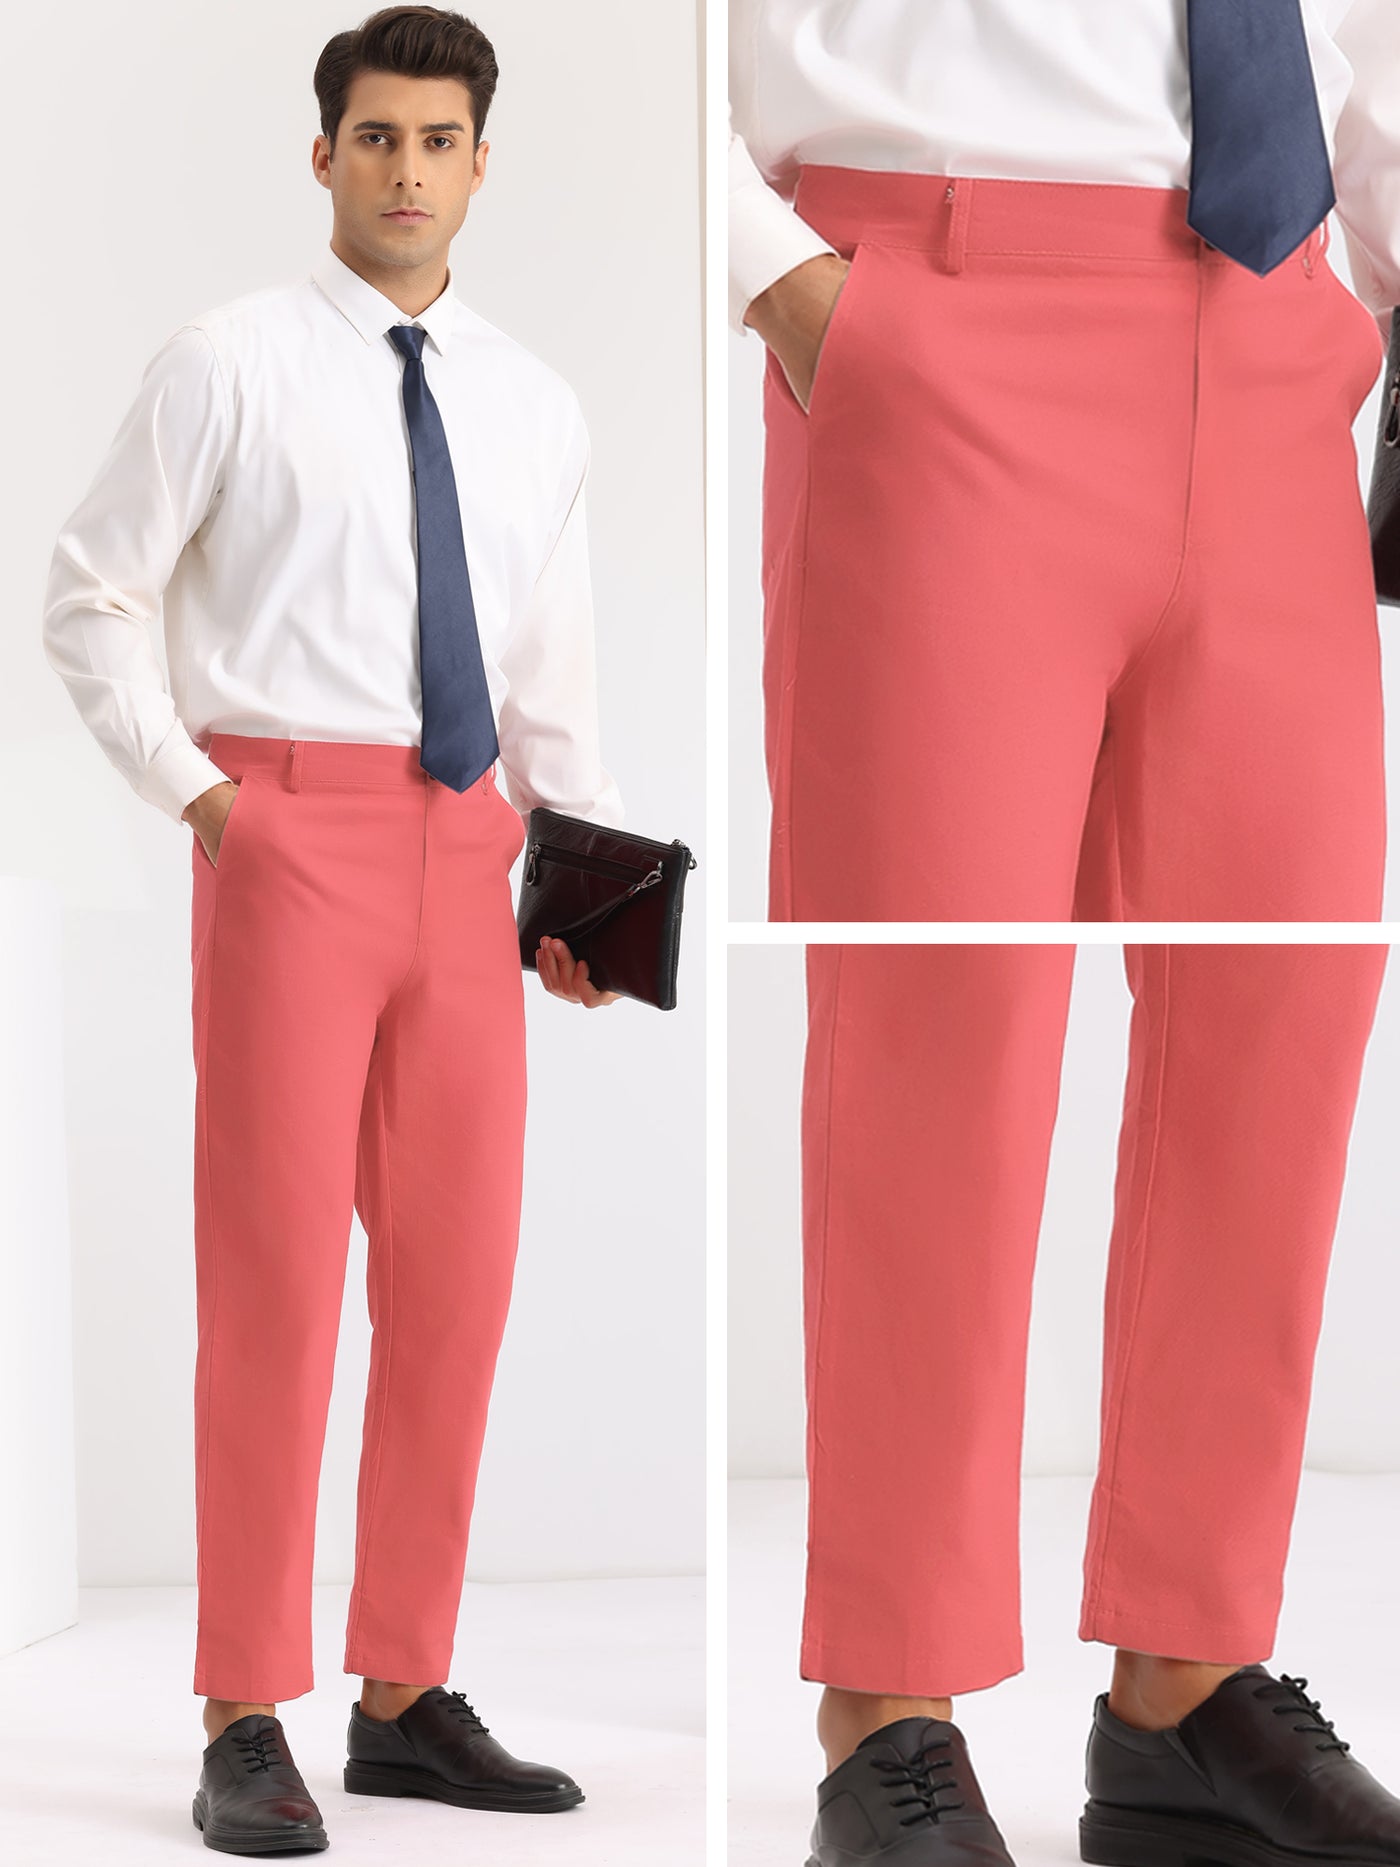 Bublédon Dress Pants for Men's Regular Fit Flat Front Solid Business Wedding Trousers